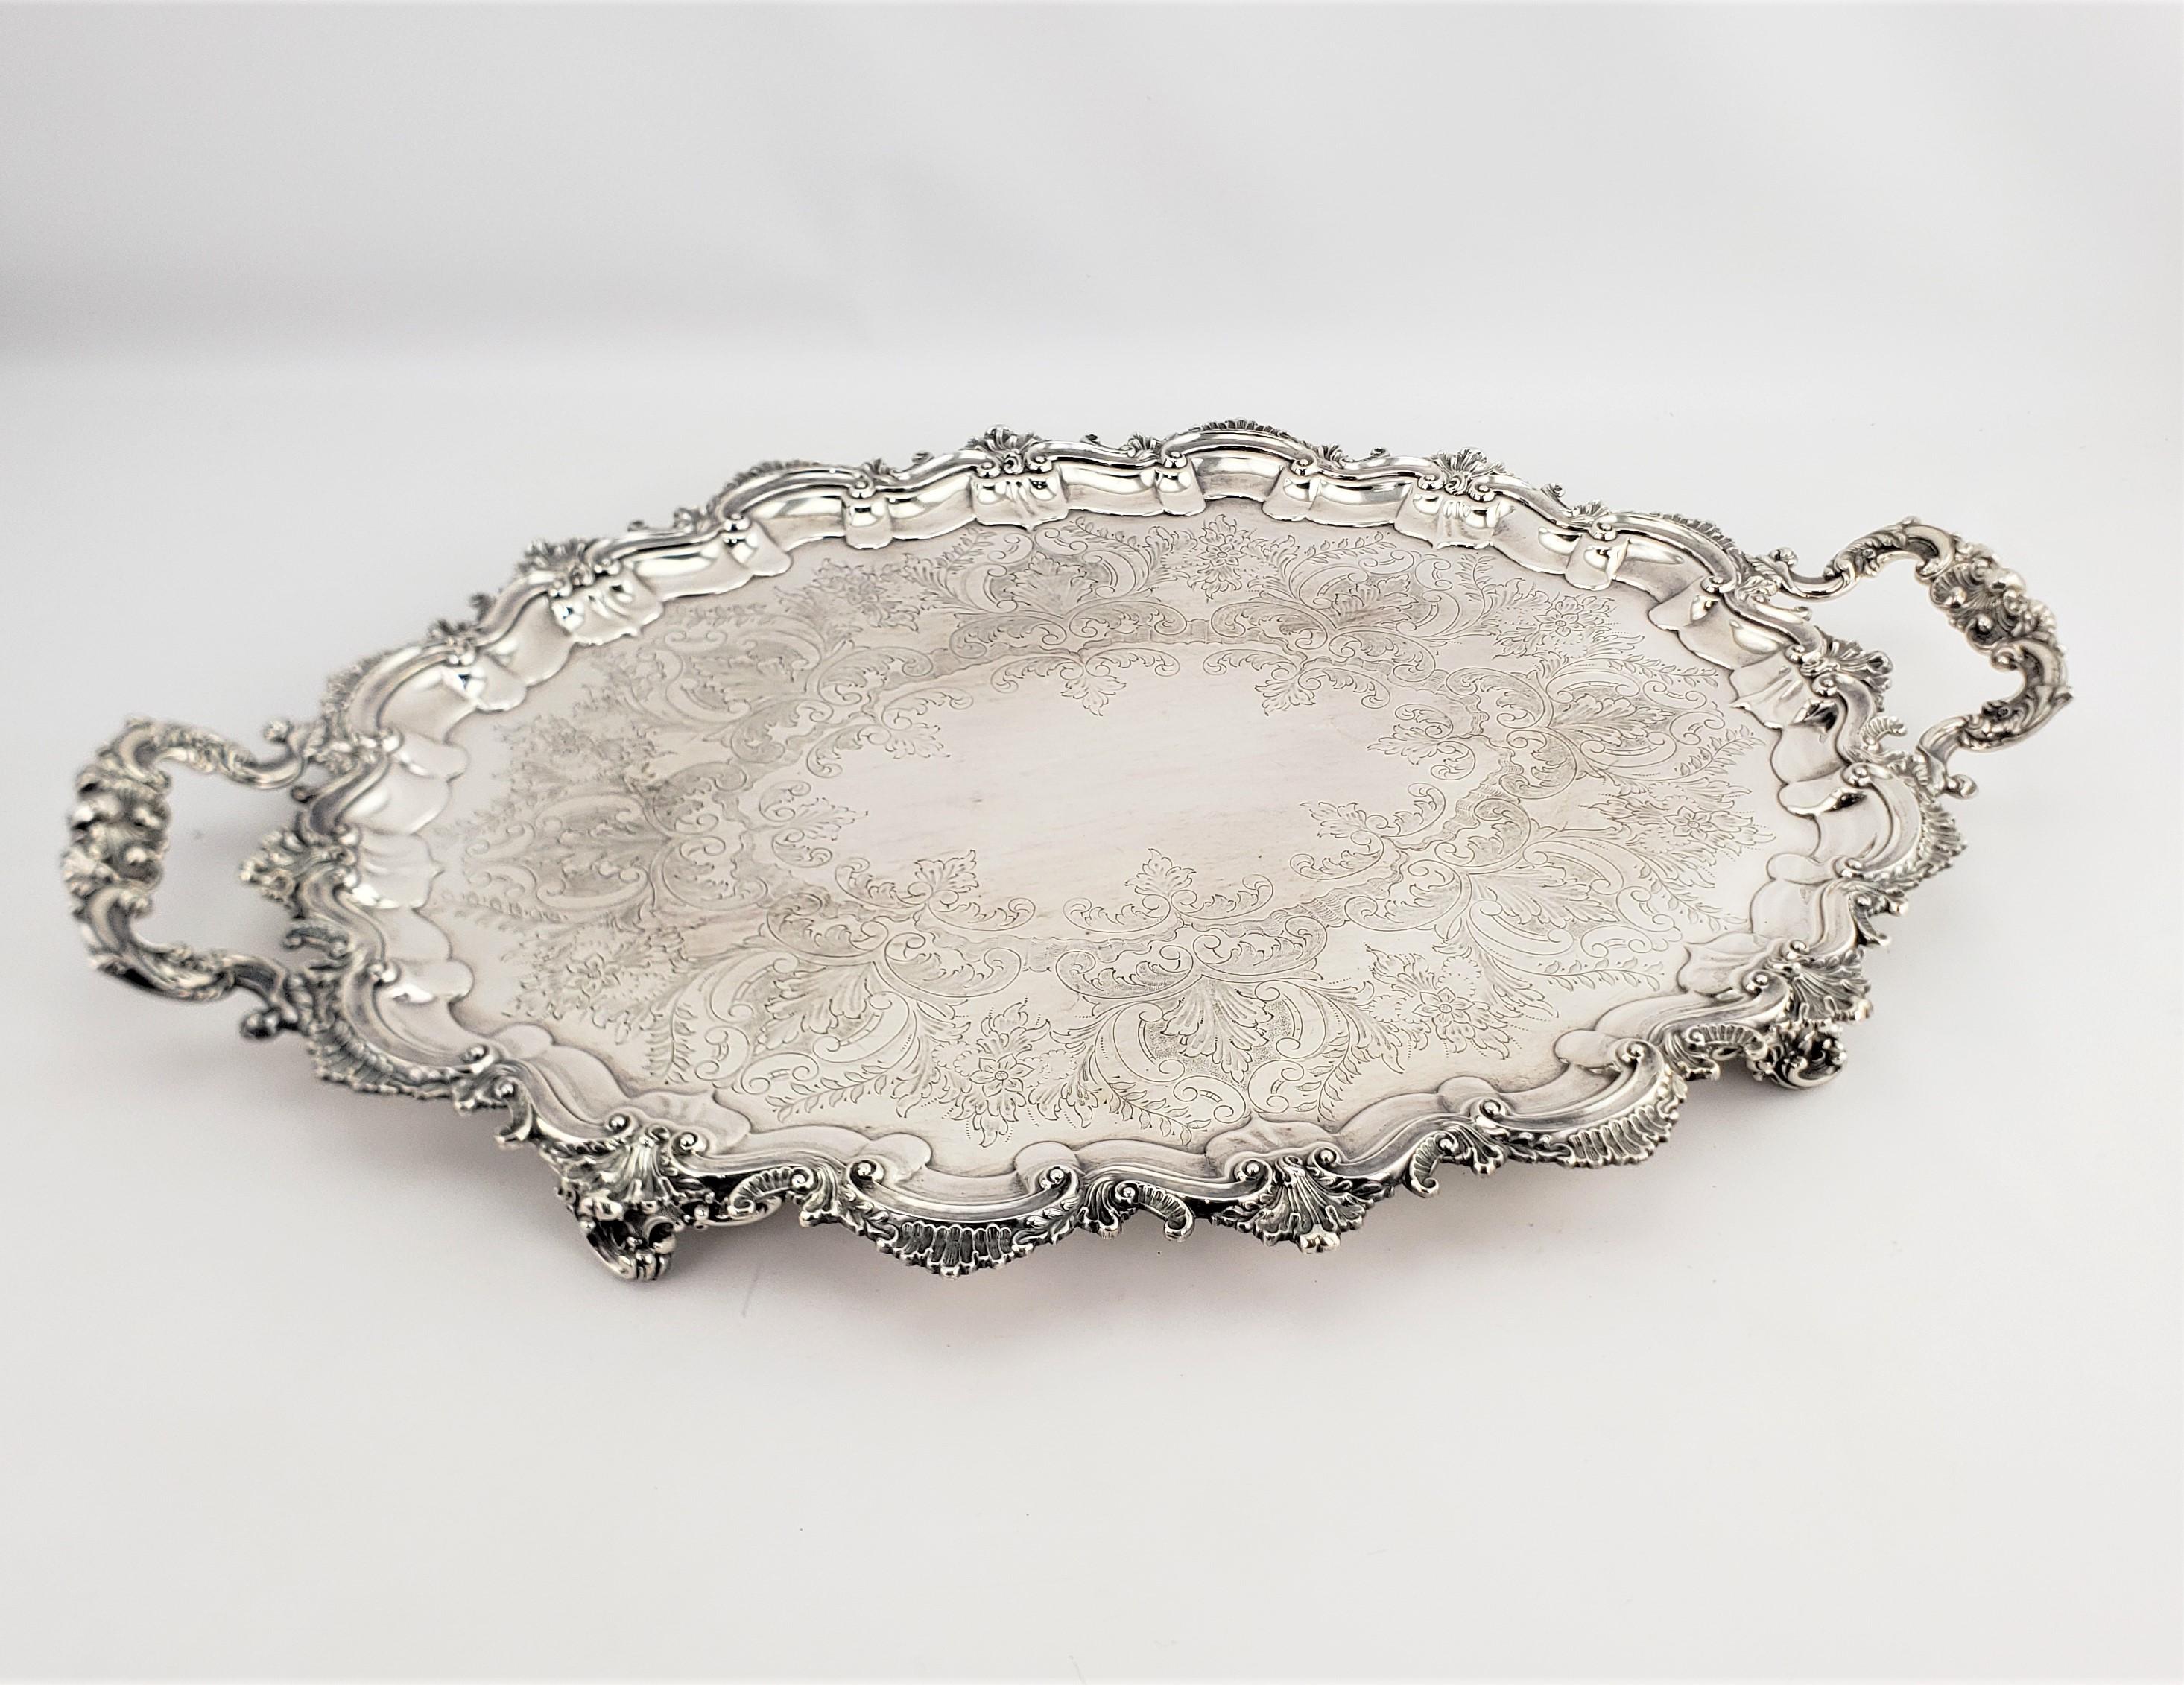 antique silver tray